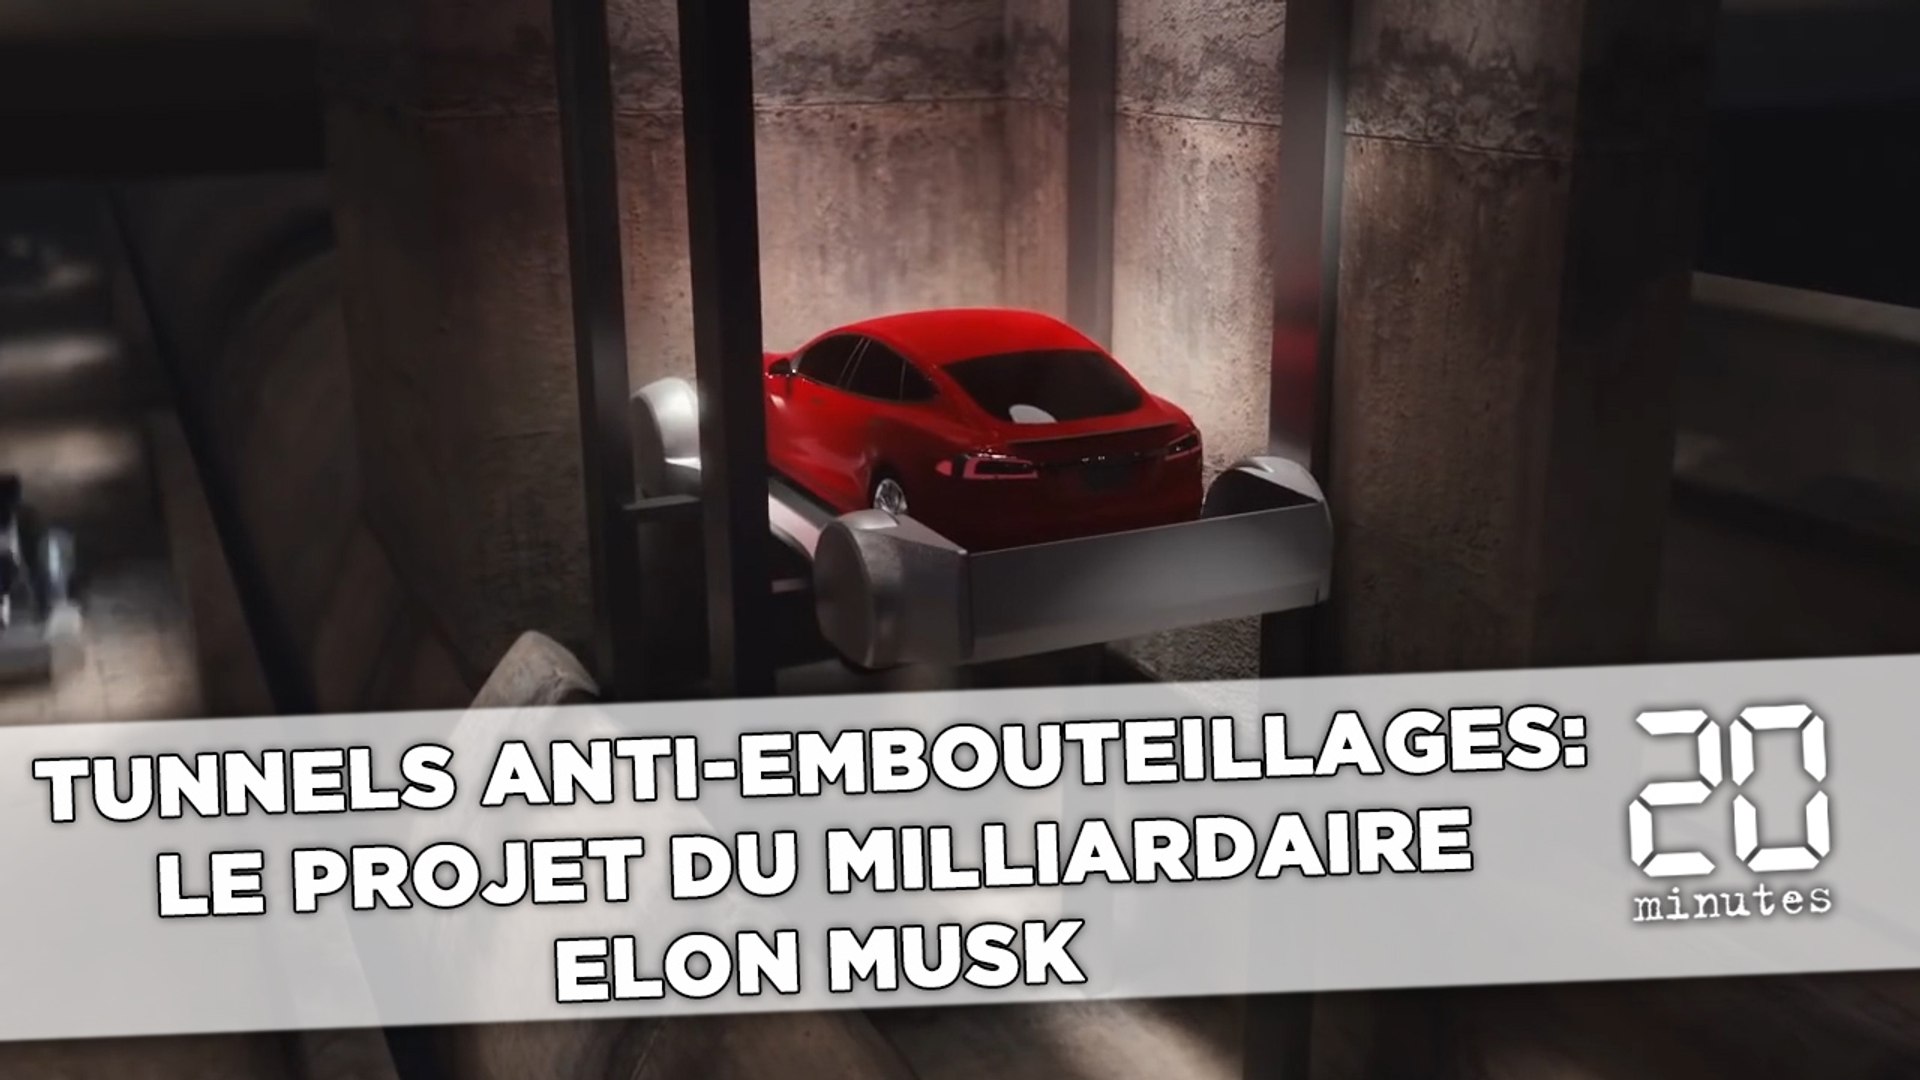 Tunnels anti-embouteillages: Le projet d'Elon Musk